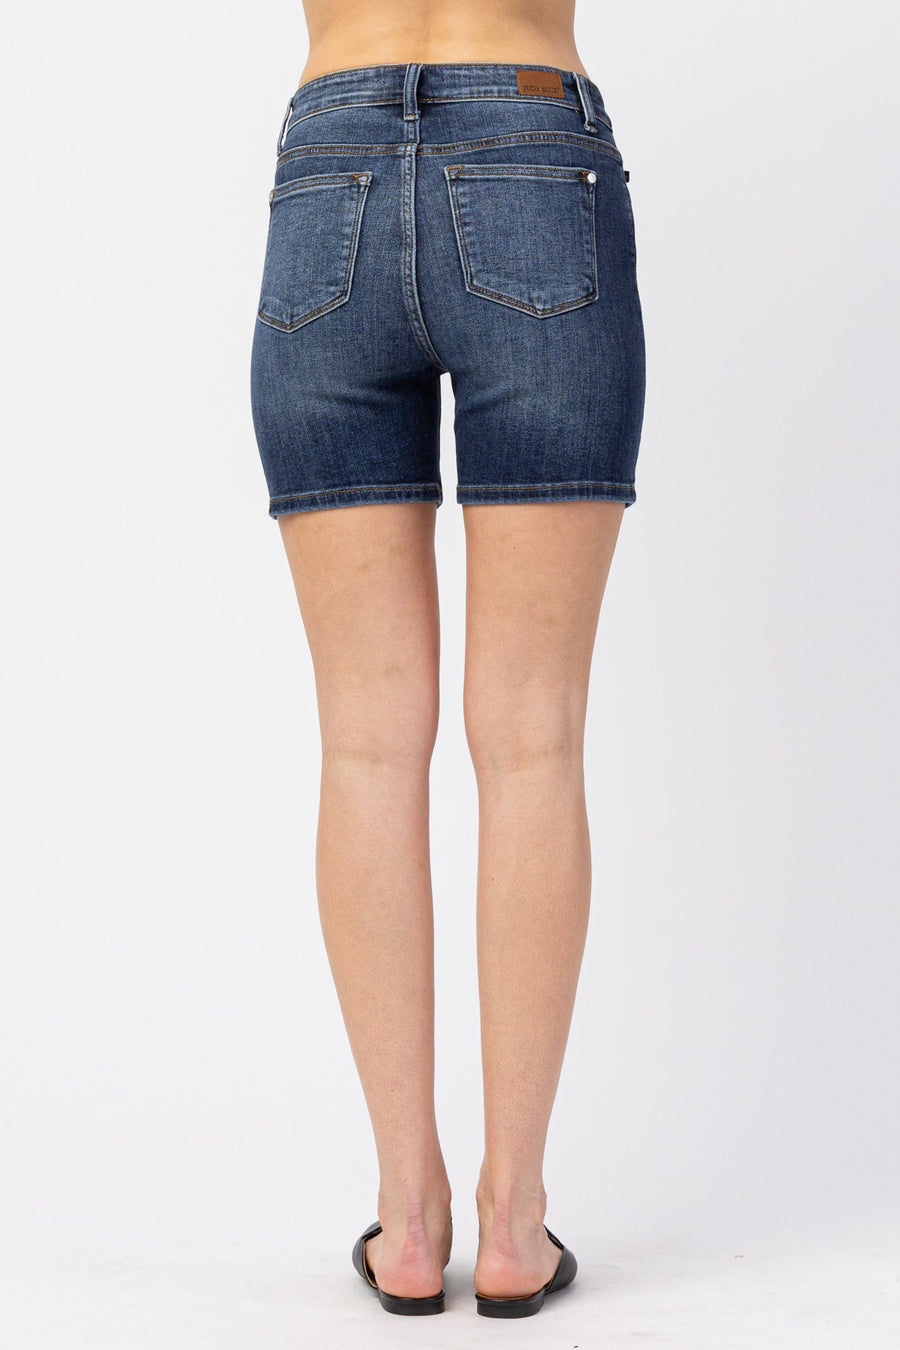 Senzu Classic Mid Length Shorts - PLUS